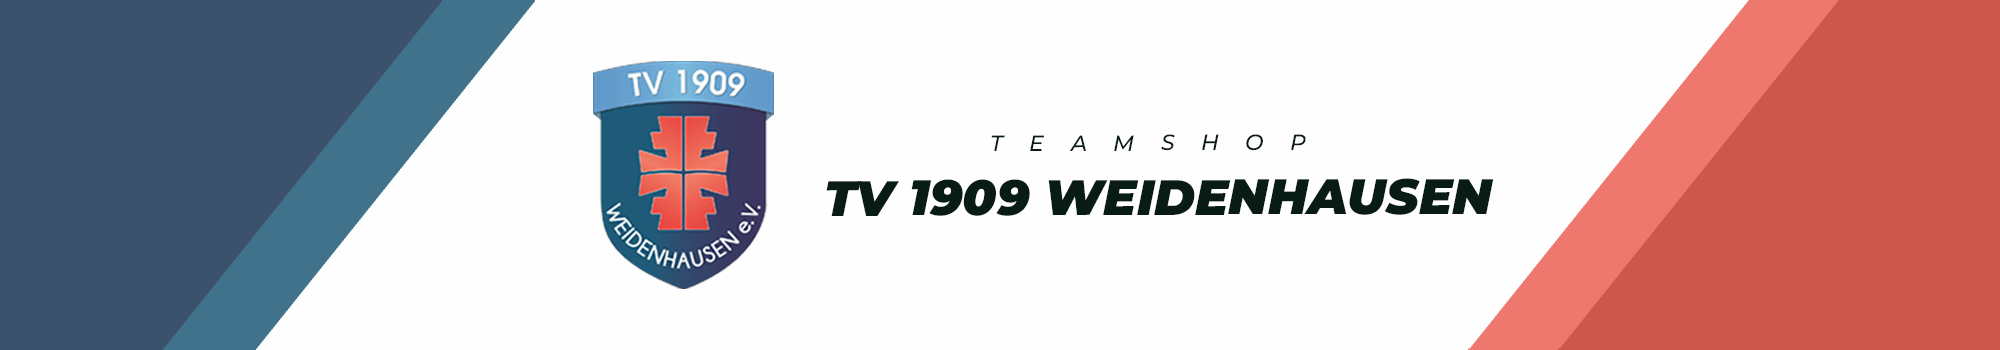 TV 1909 Weidenhausen